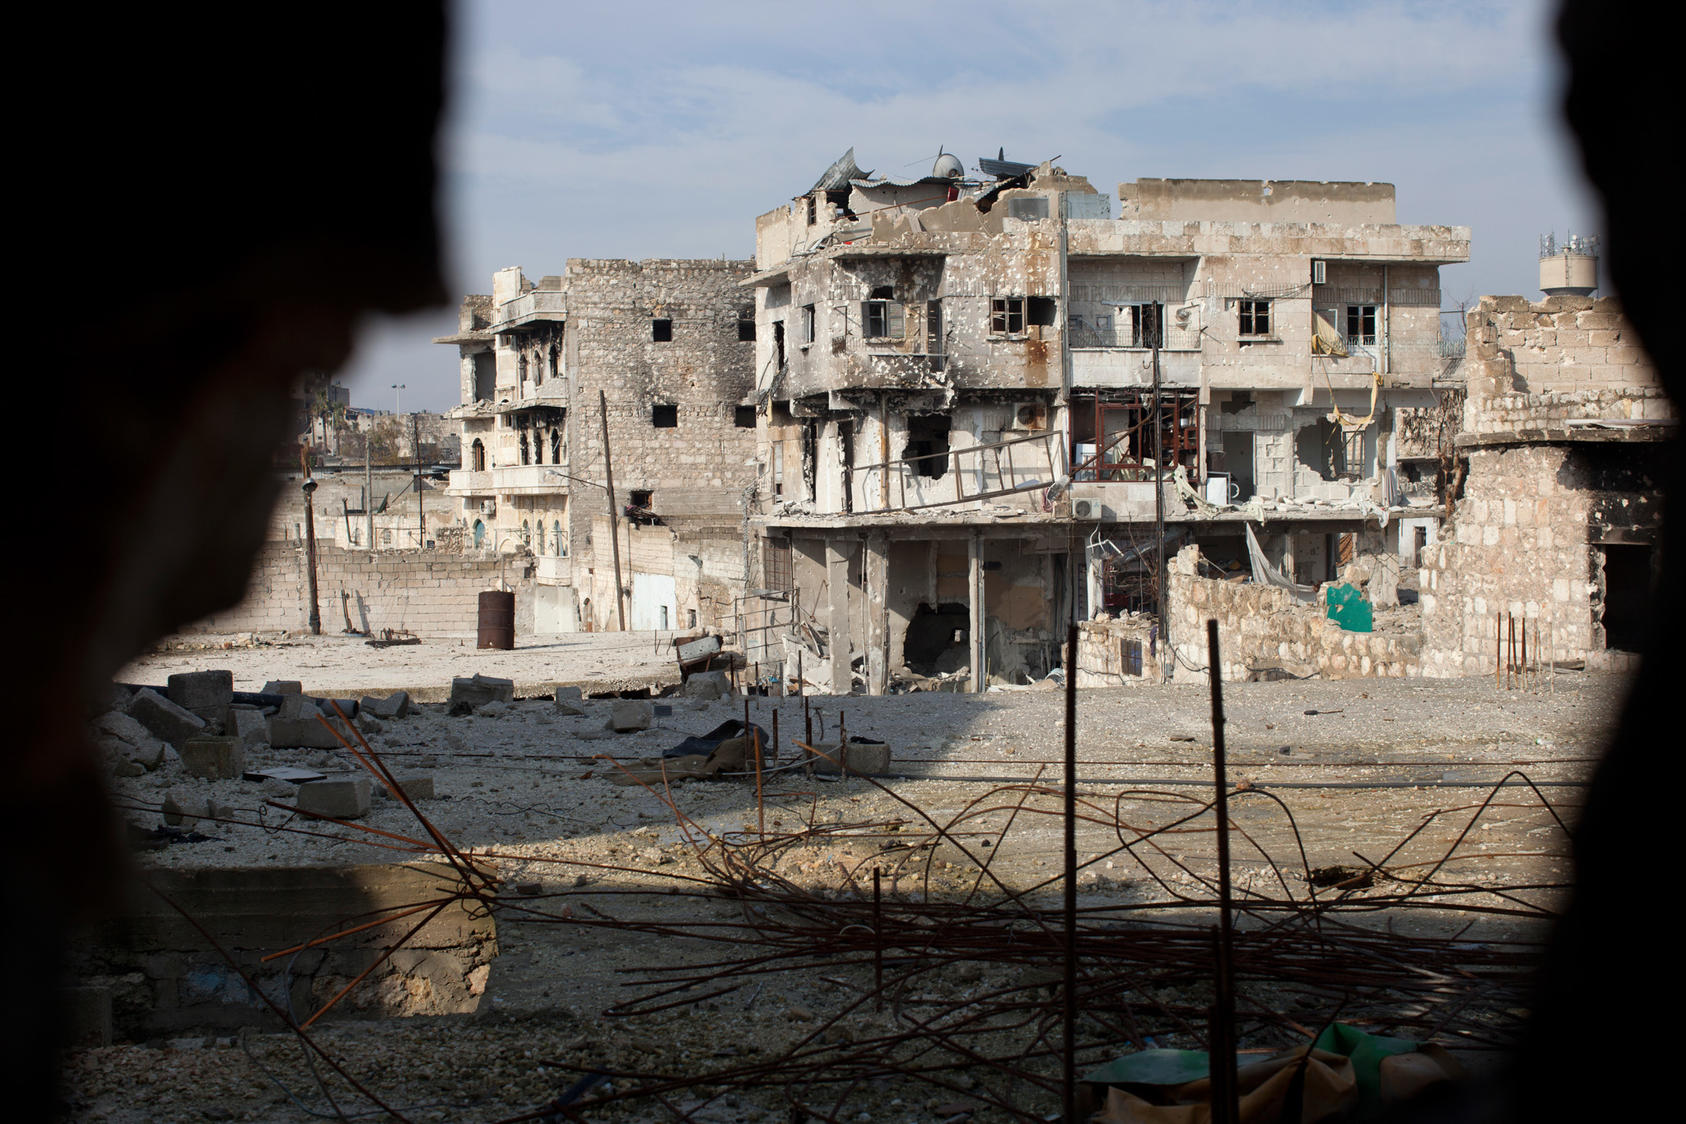 Aleppo, Syria. Photo Courtesy of the New York Times/Tyler Hicks